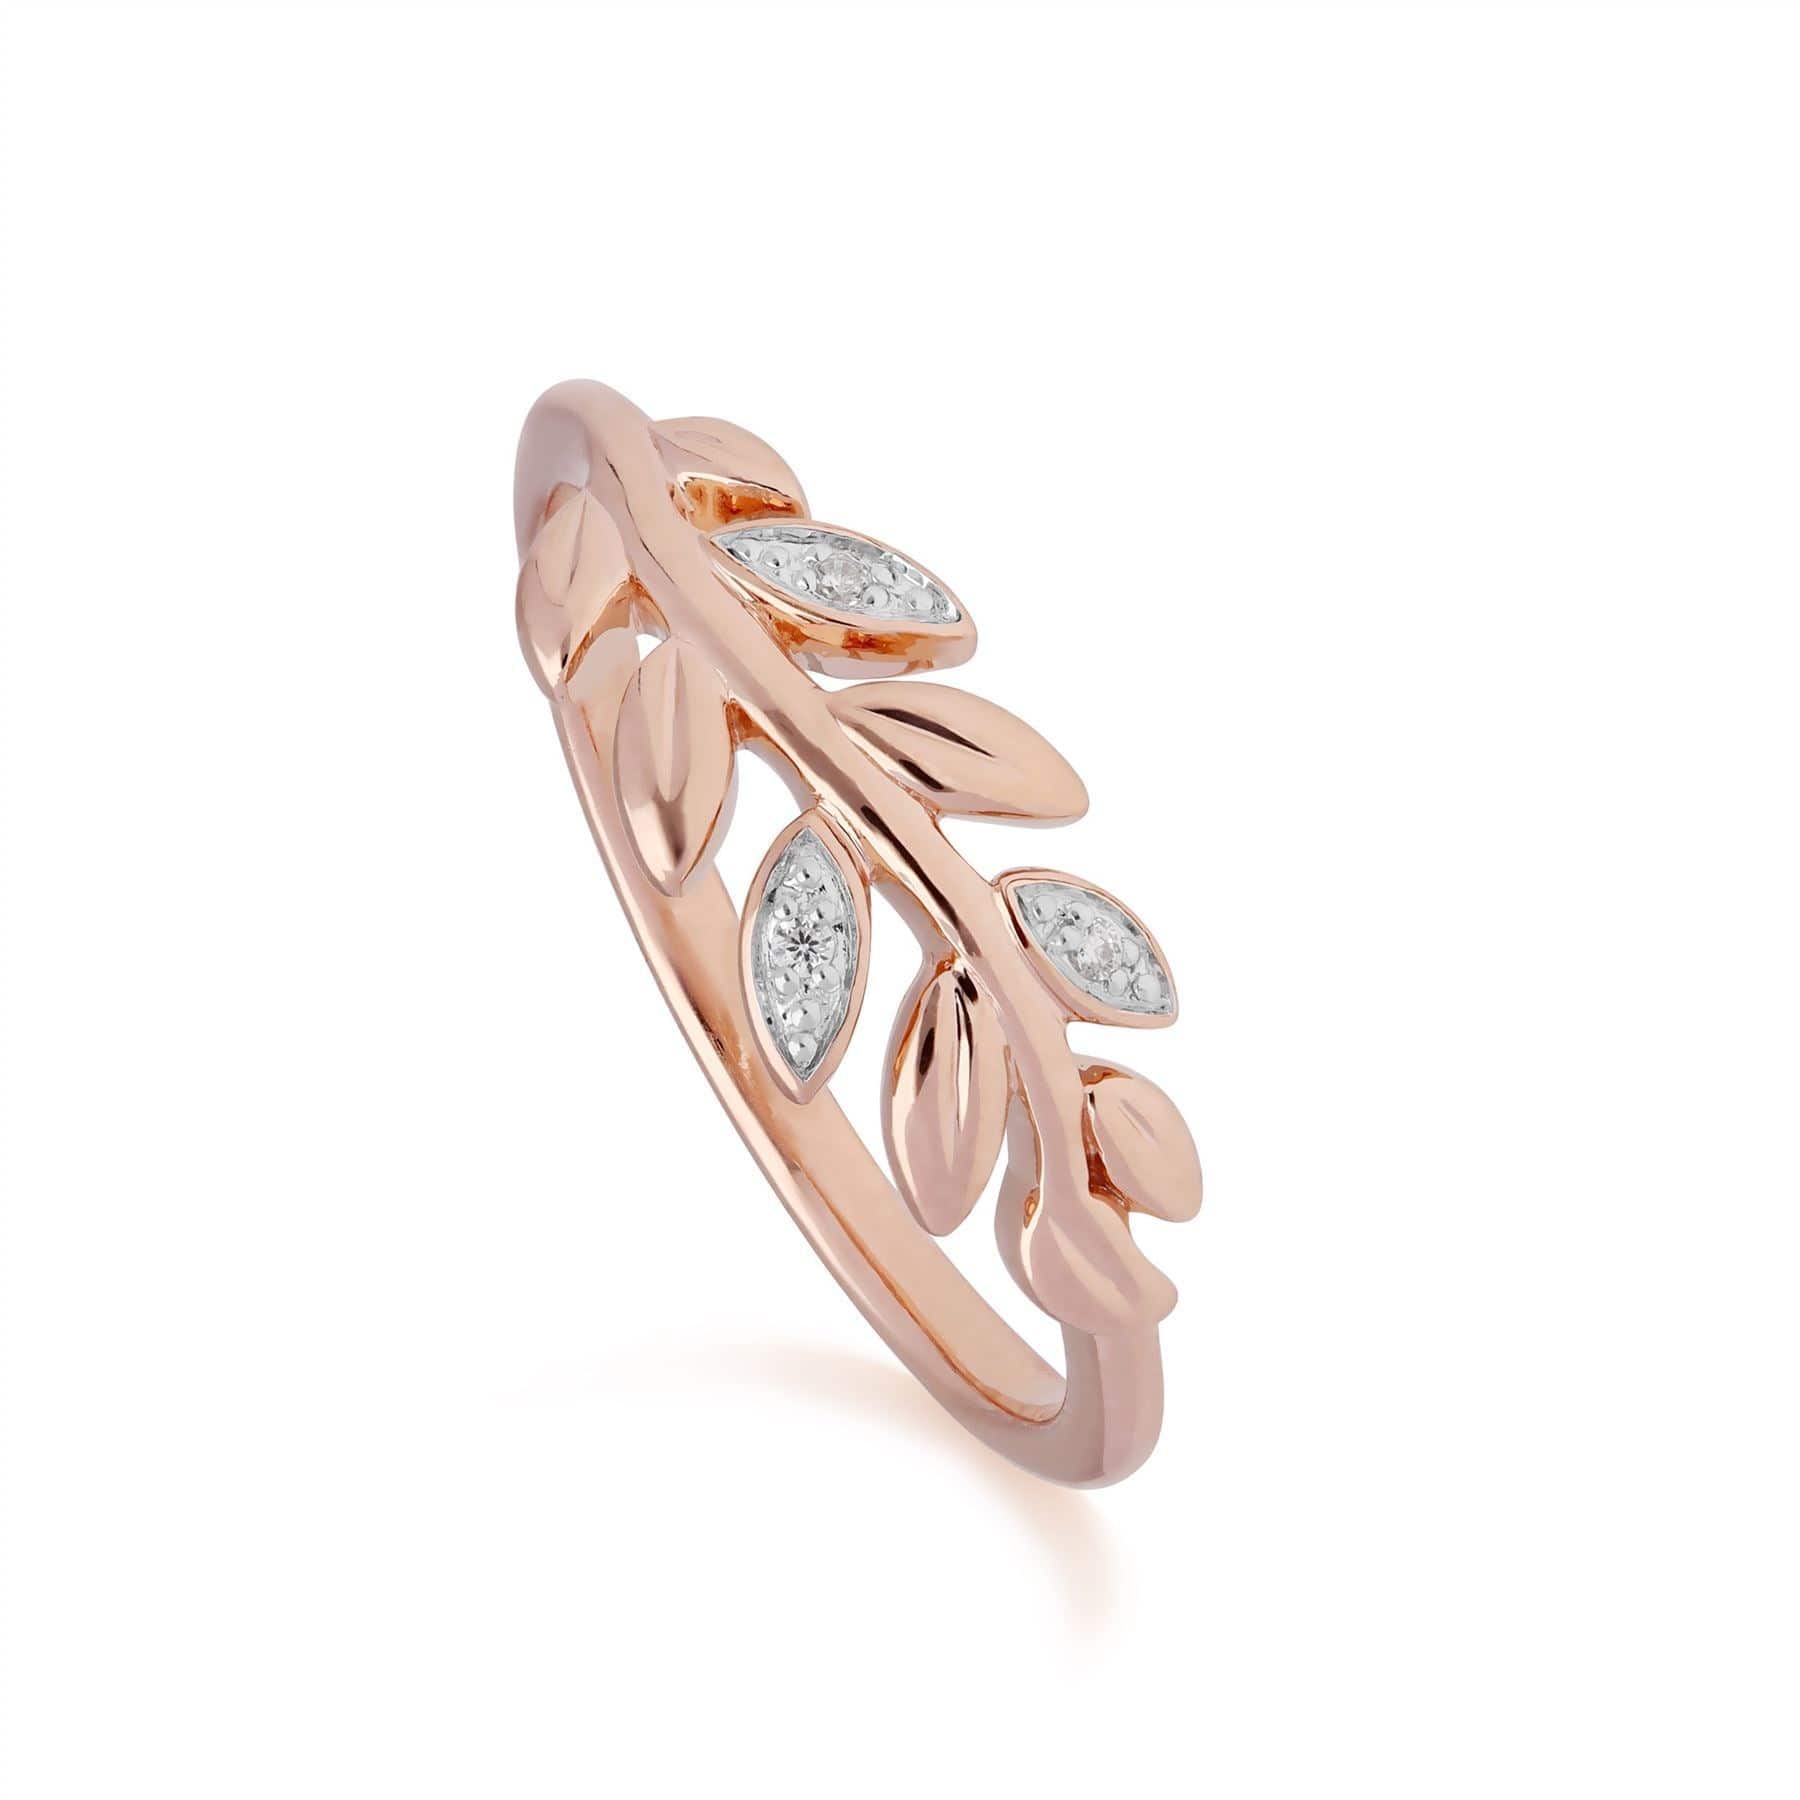 O Leaf Diamond Stud Earring & Ring Set in 9ct Rose Gold - Gemondo